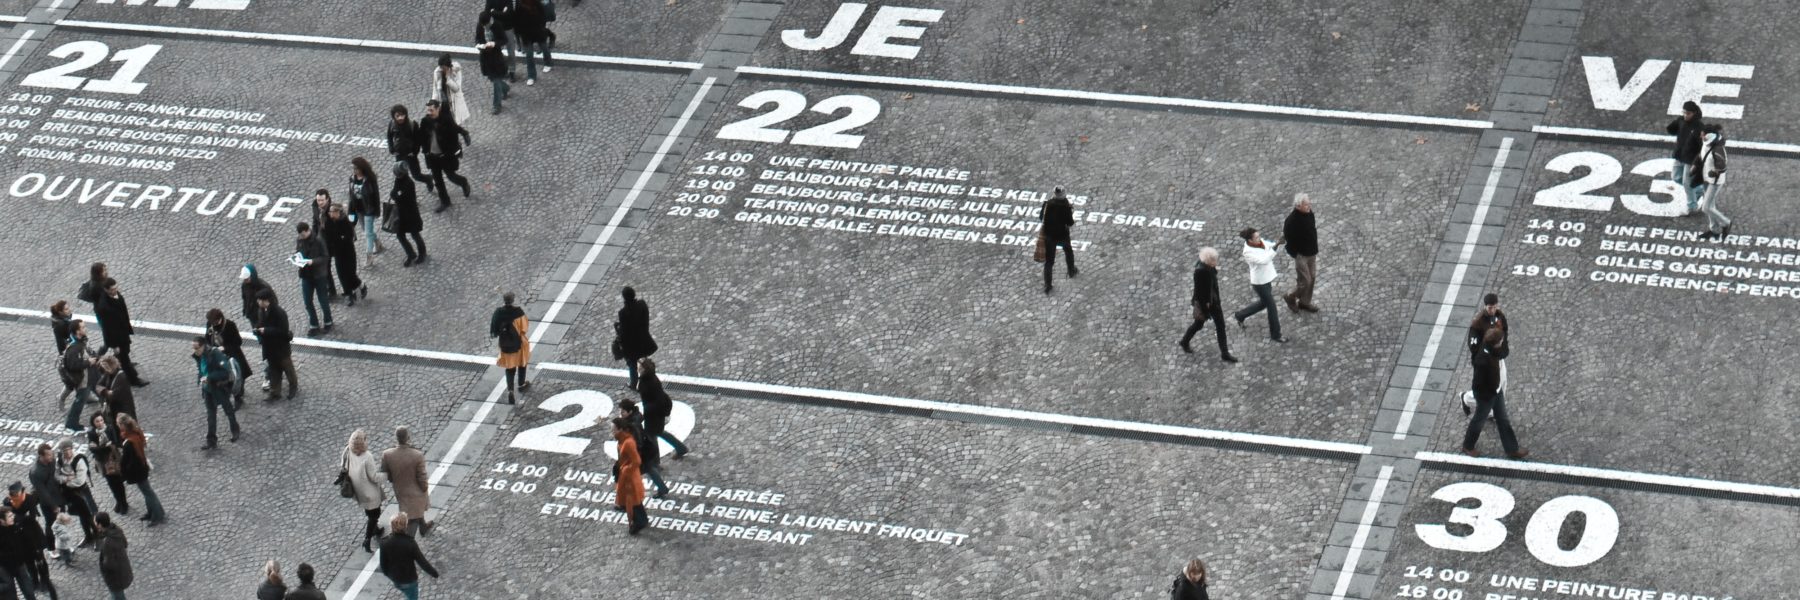 people walking on pavement